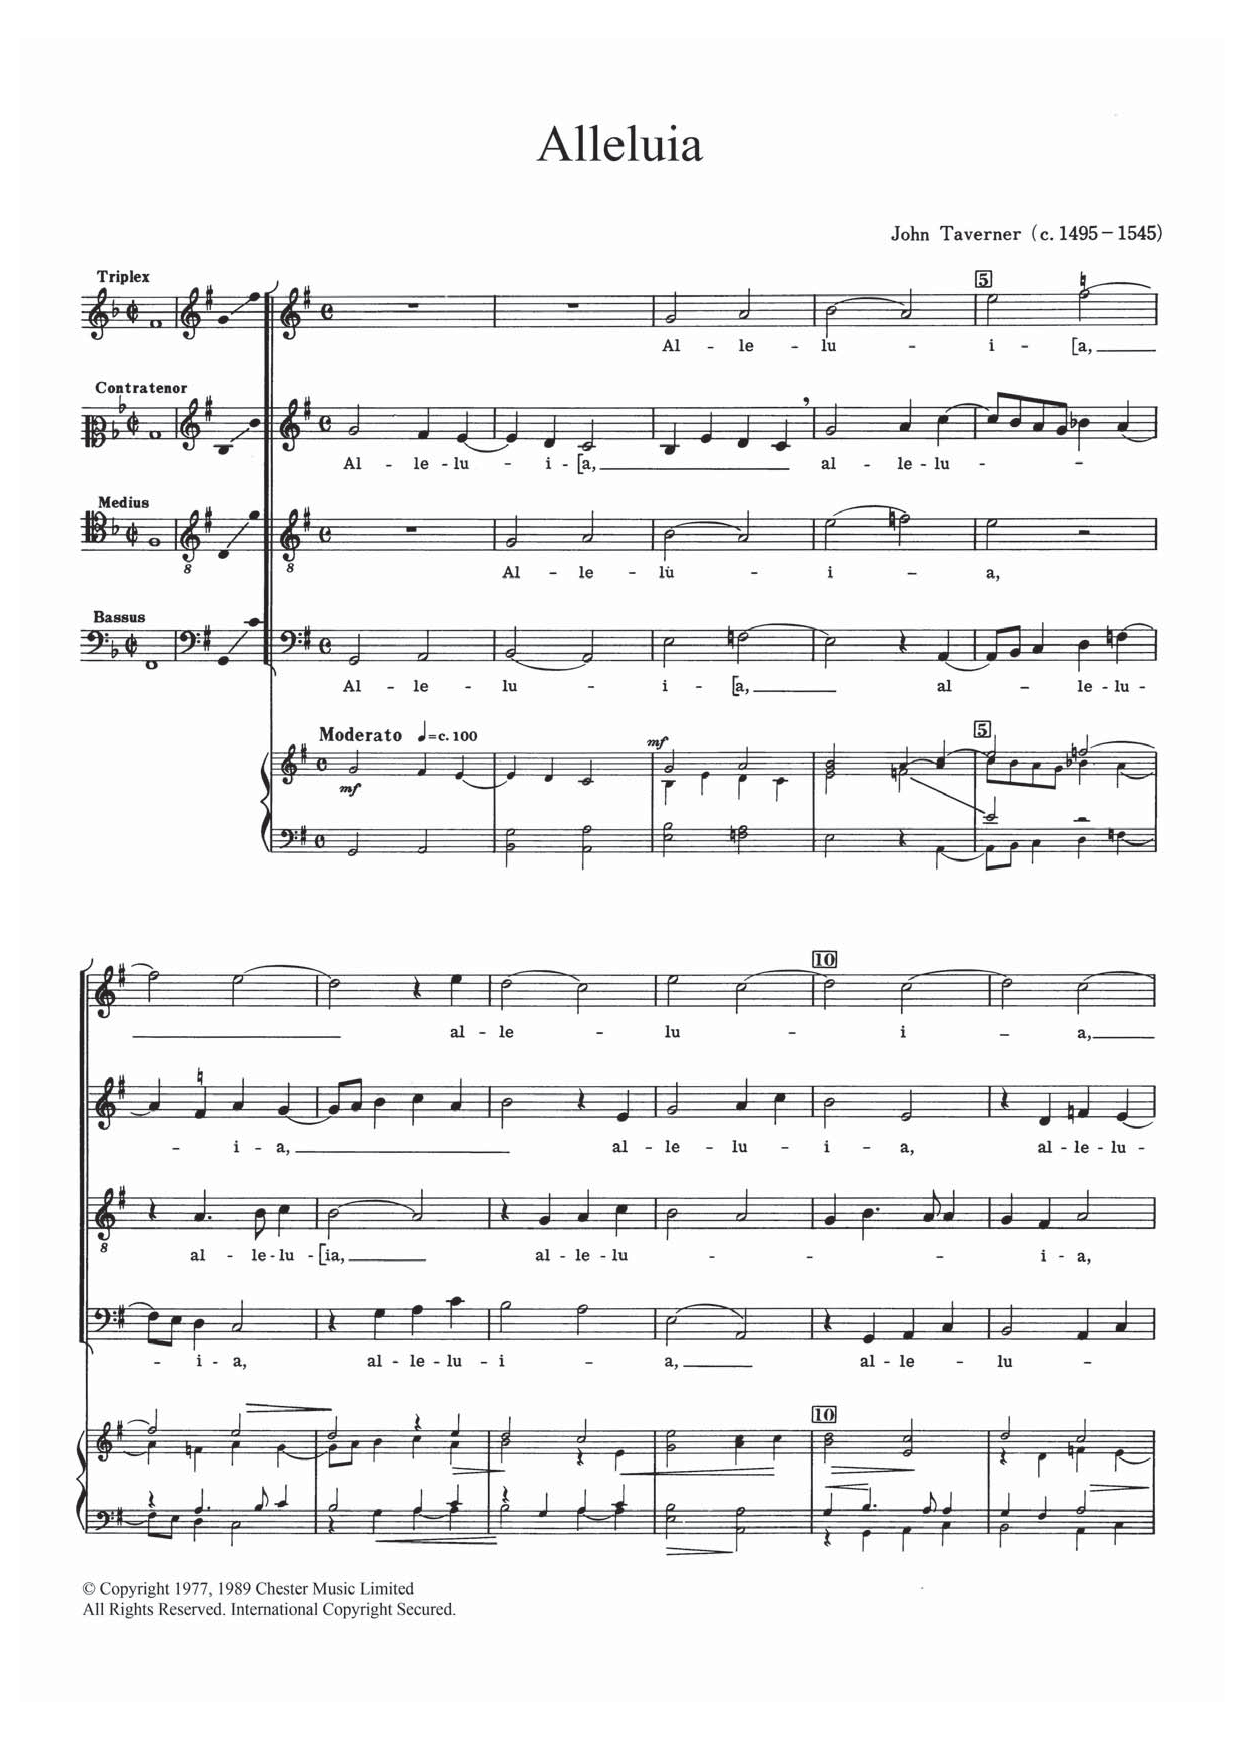 John Tavener Alleluia Sheet Music Notes & Chords for SATB - Download or Print PDF